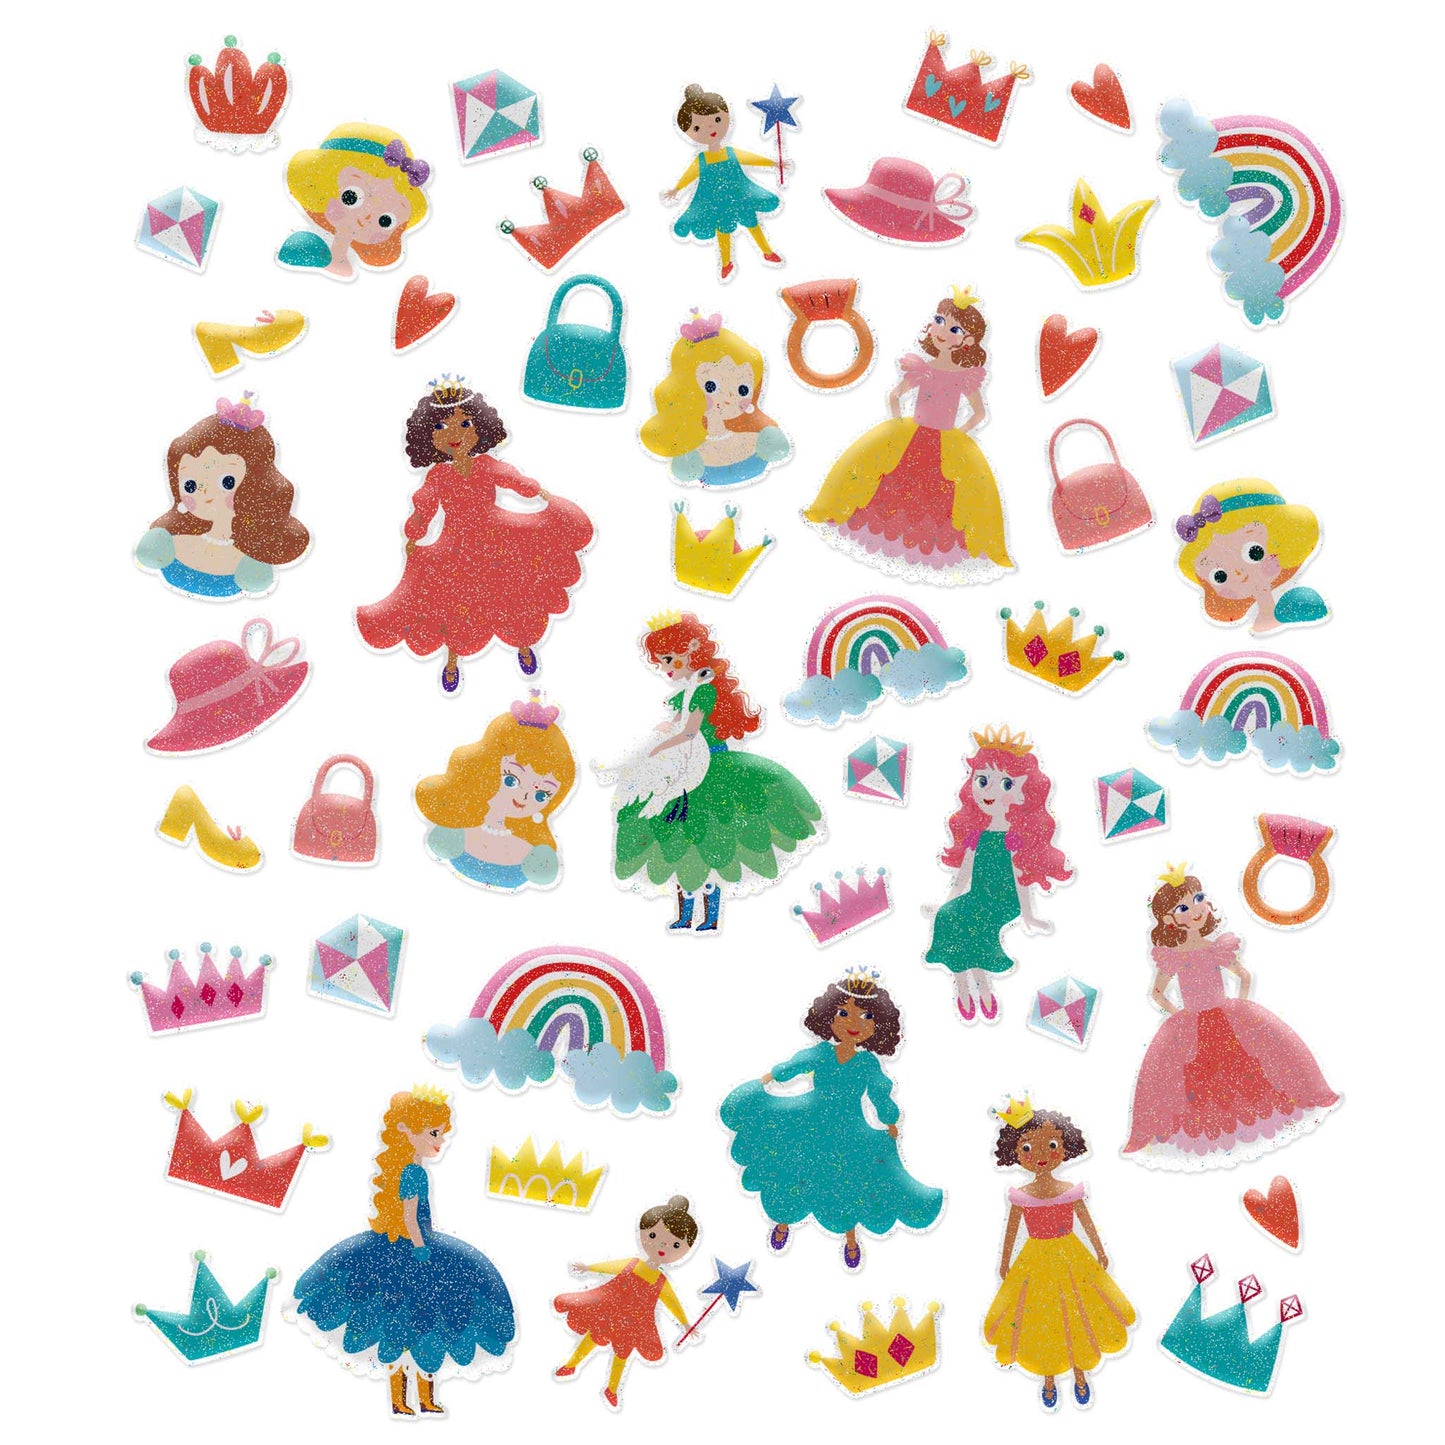 Puffy Stickers Princess